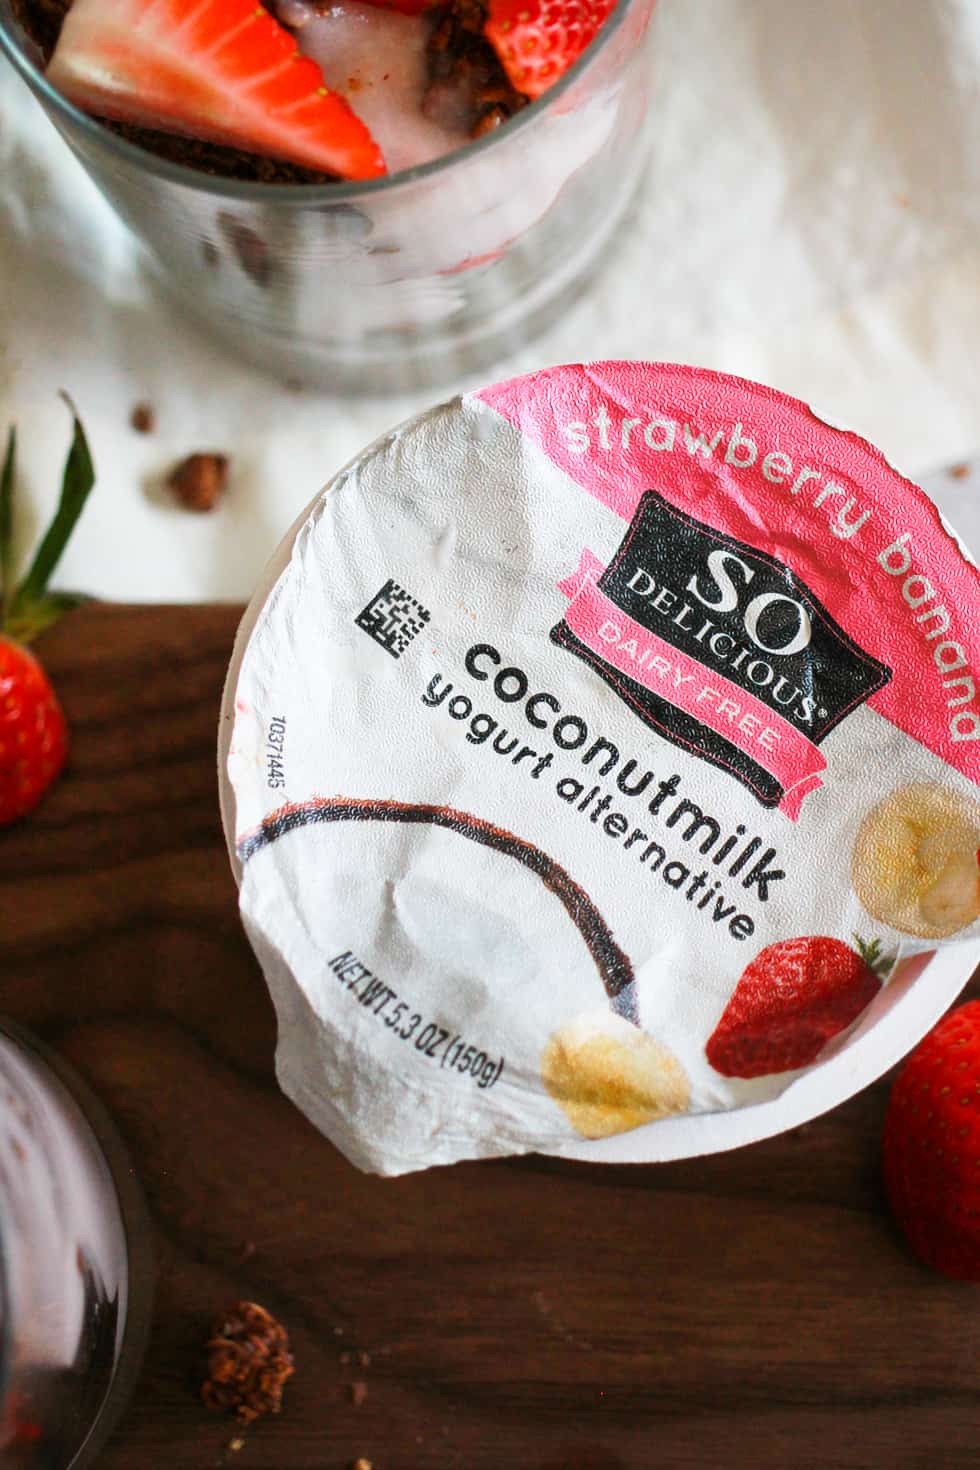 Carton of So Delicious strawberry banana yogurt alternative.